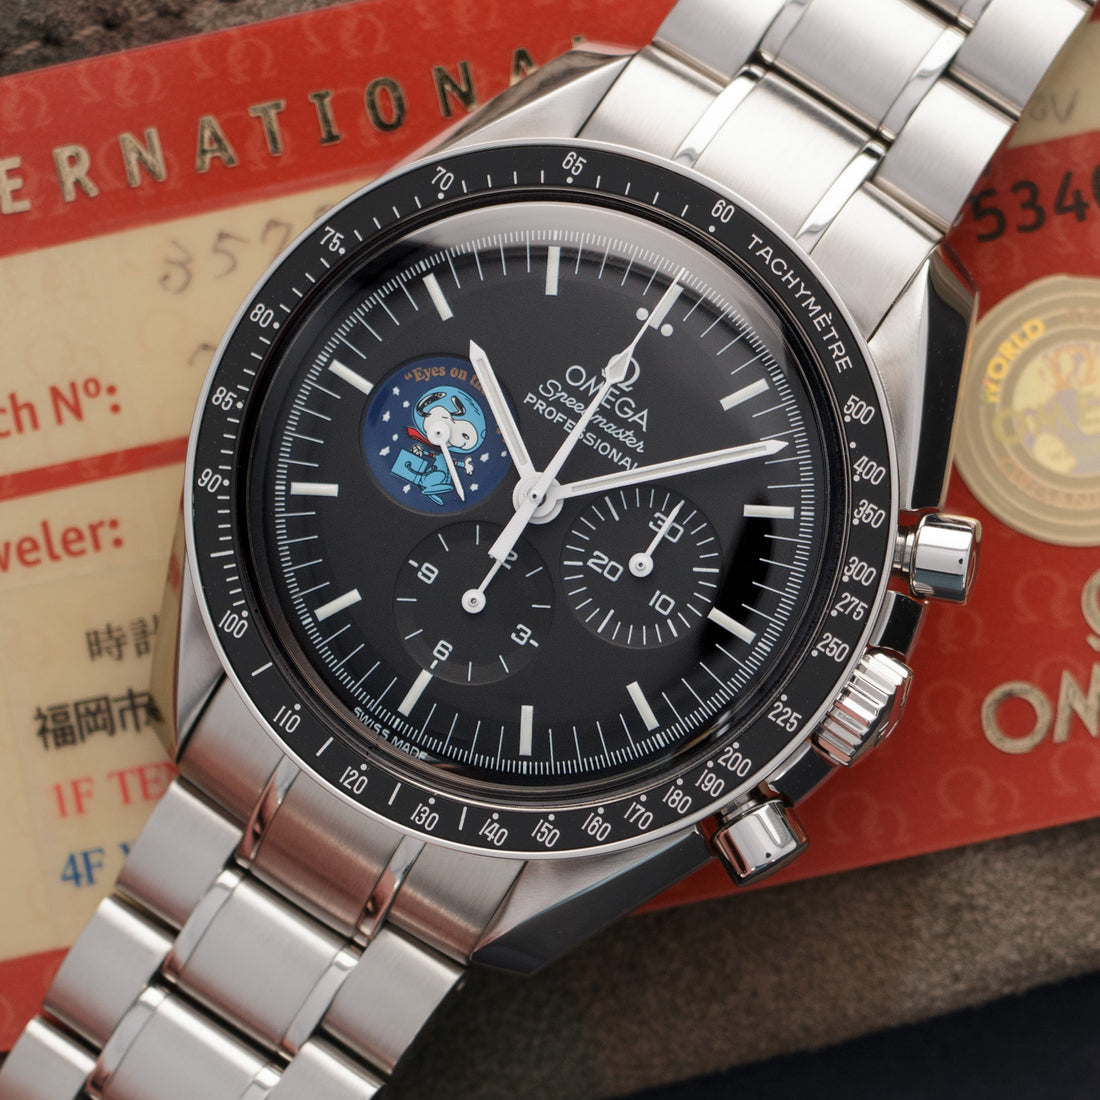 Omega Speedmaster Moonwatch Snoopy Award Watch Ref. 3578.51.00